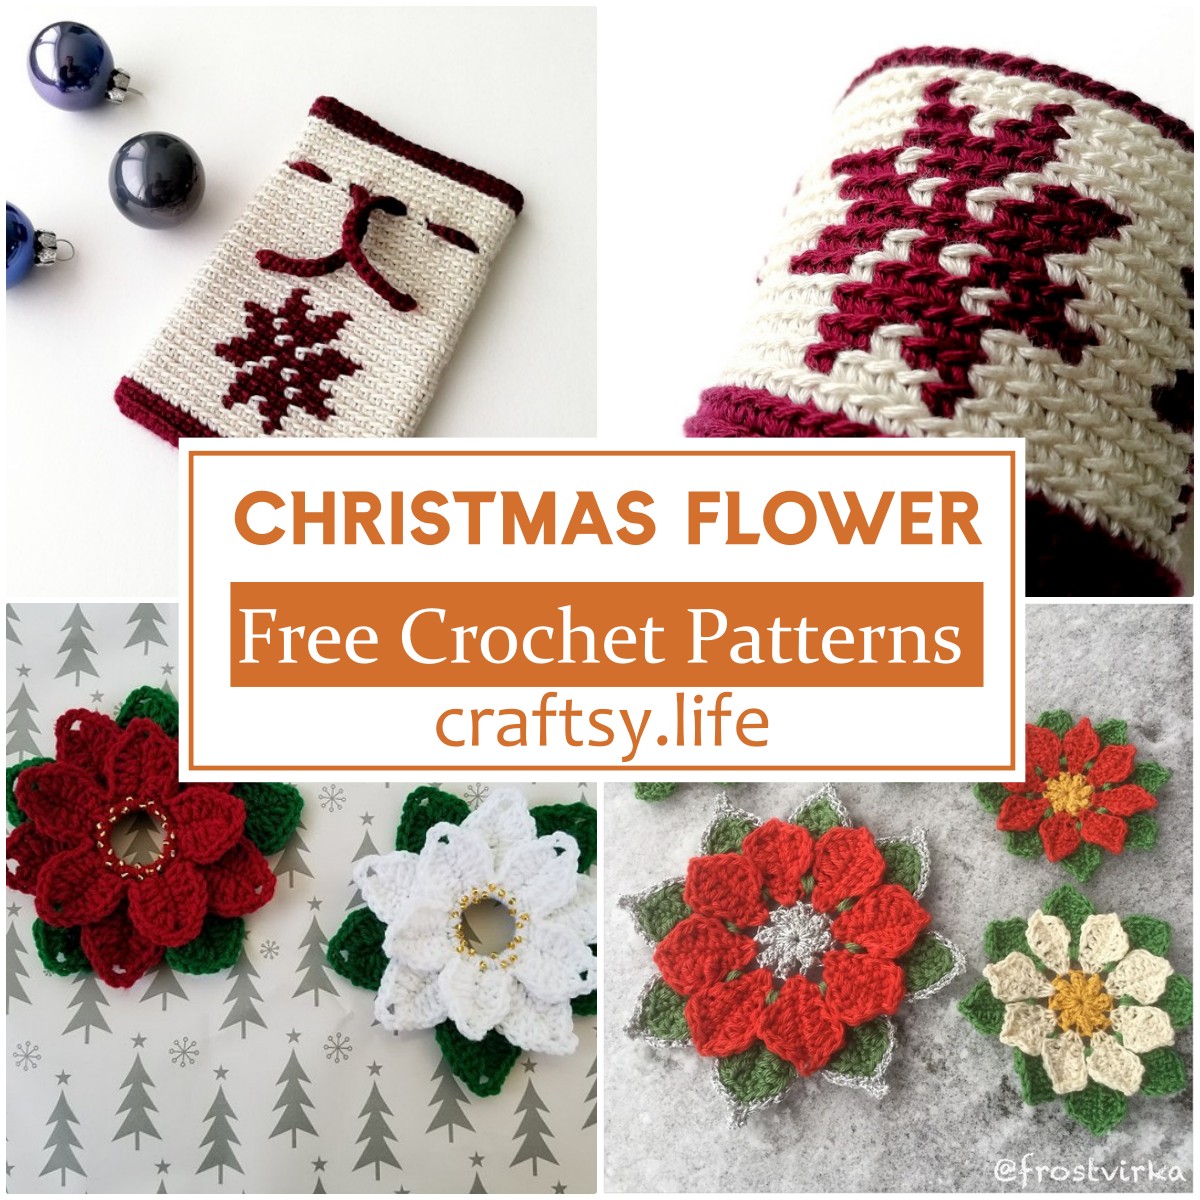 Free Crochet Christmas Flower Patterns